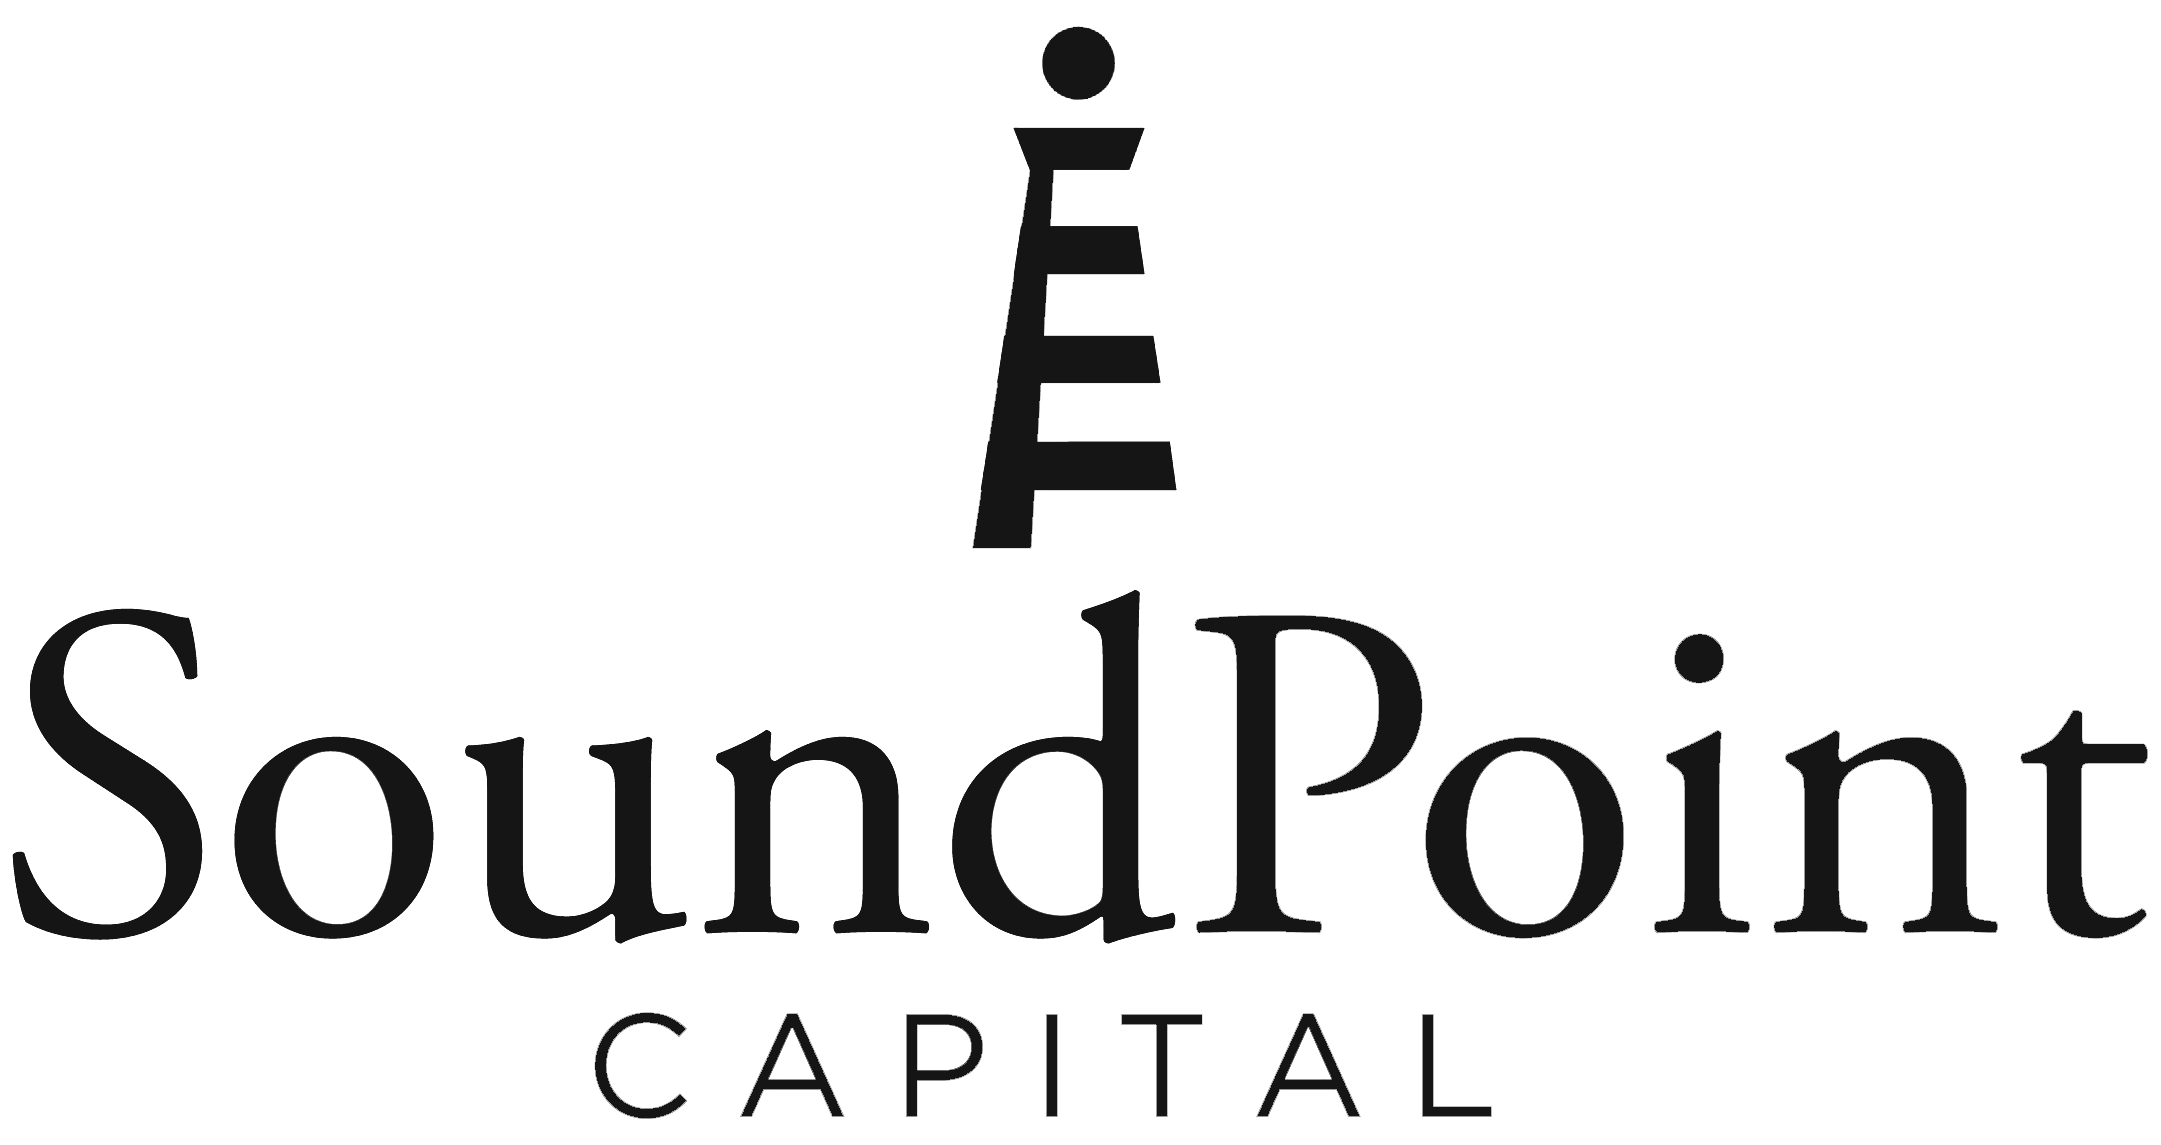 Sound Point Capital